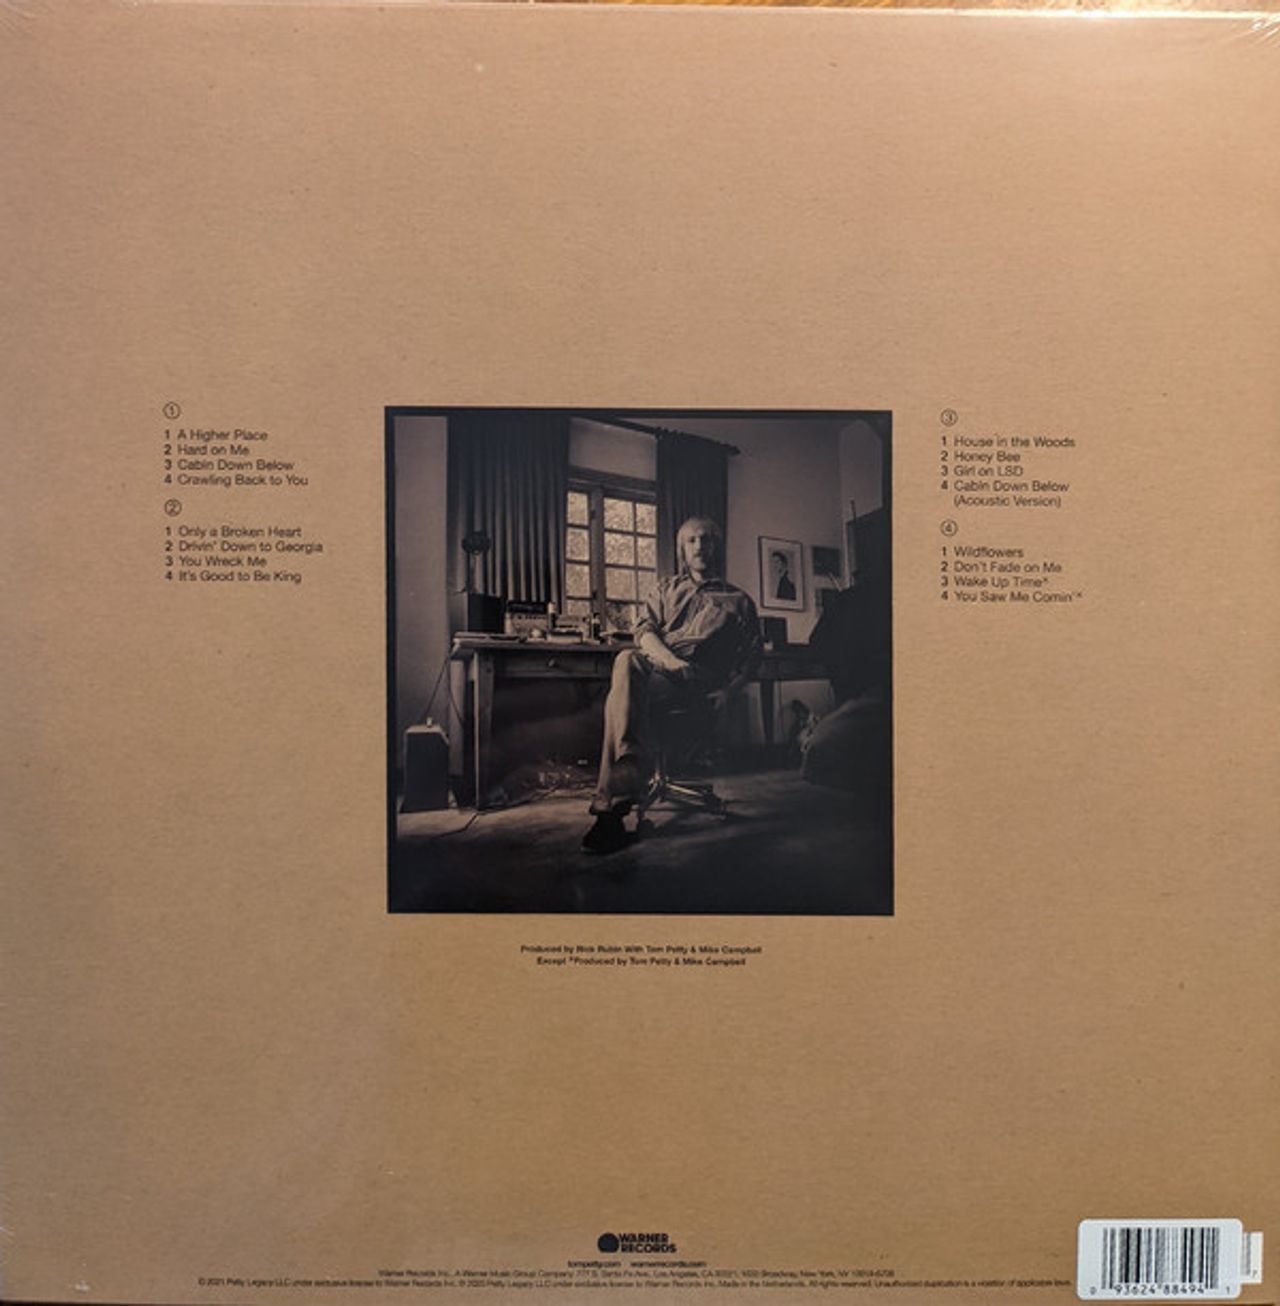 Tom Petty & The Heartbreakers Finding Wildflowers (Alternate Versions) - Gold Vinyl - Sealed UK 2-LP vinyl record set (Double LP Album) PET2LFI767594